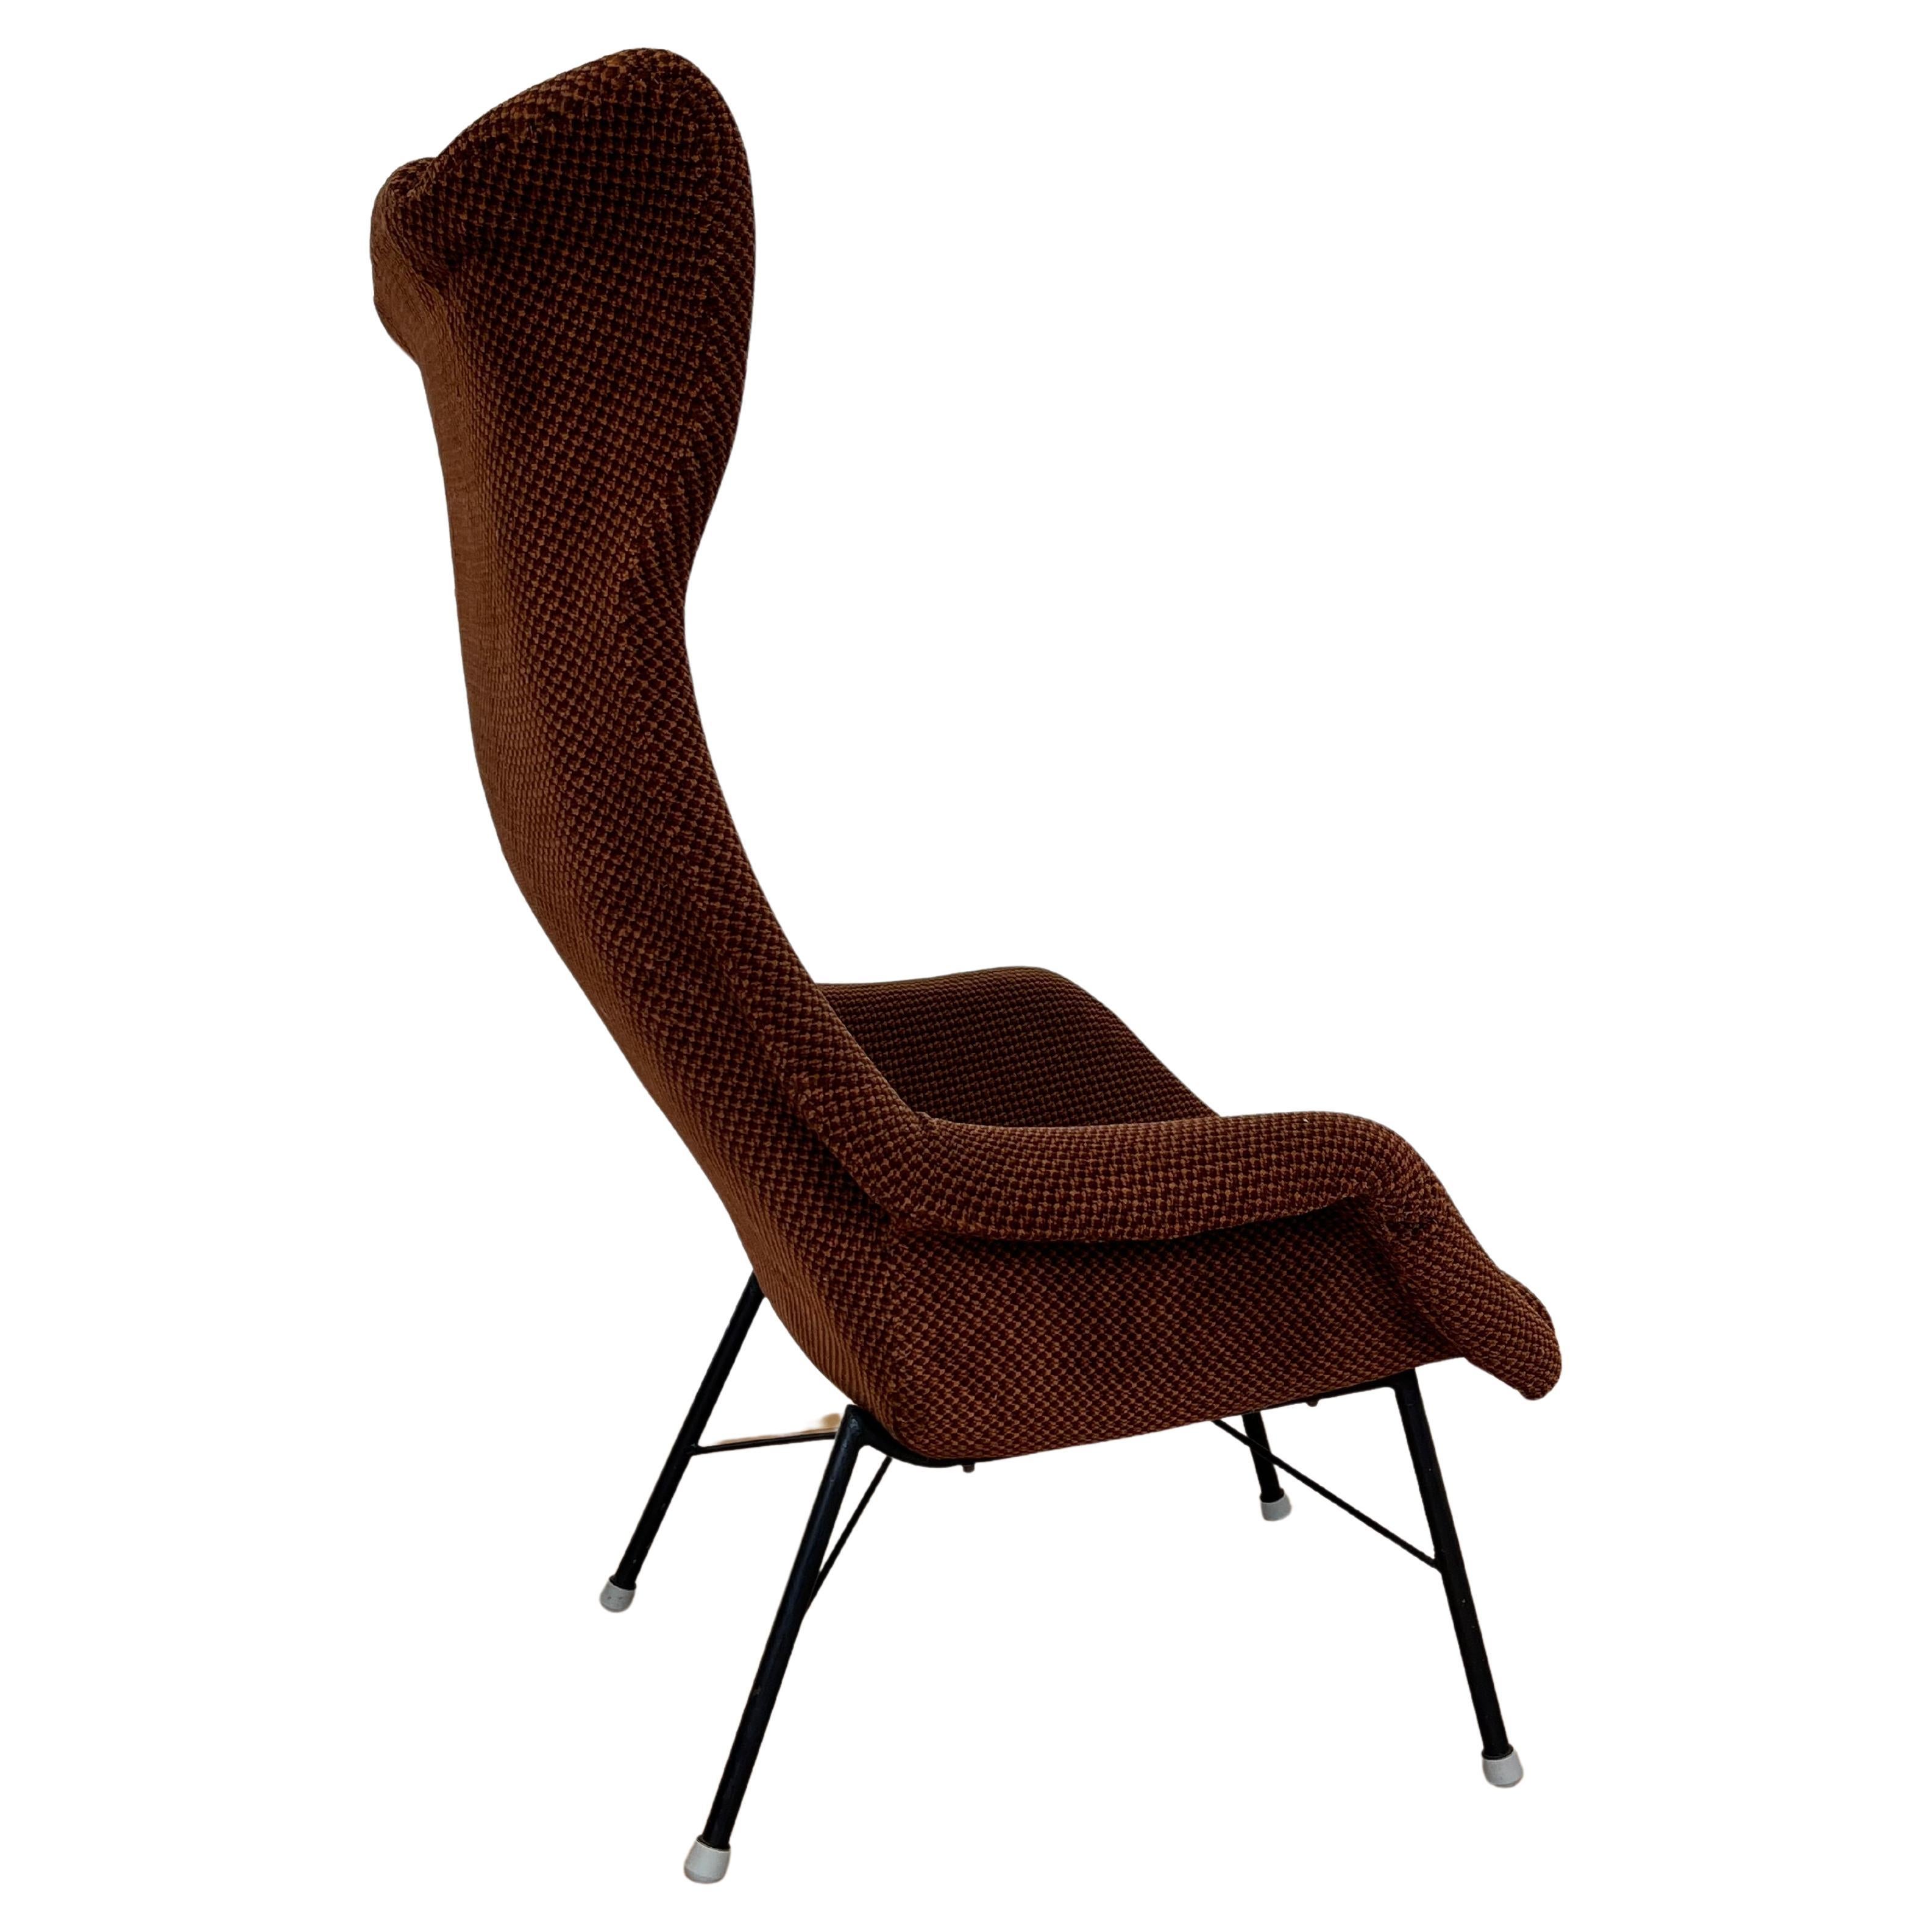 Original Design Fiberglass Wing Chair by Miroslav Navratil, 1970s For Sale